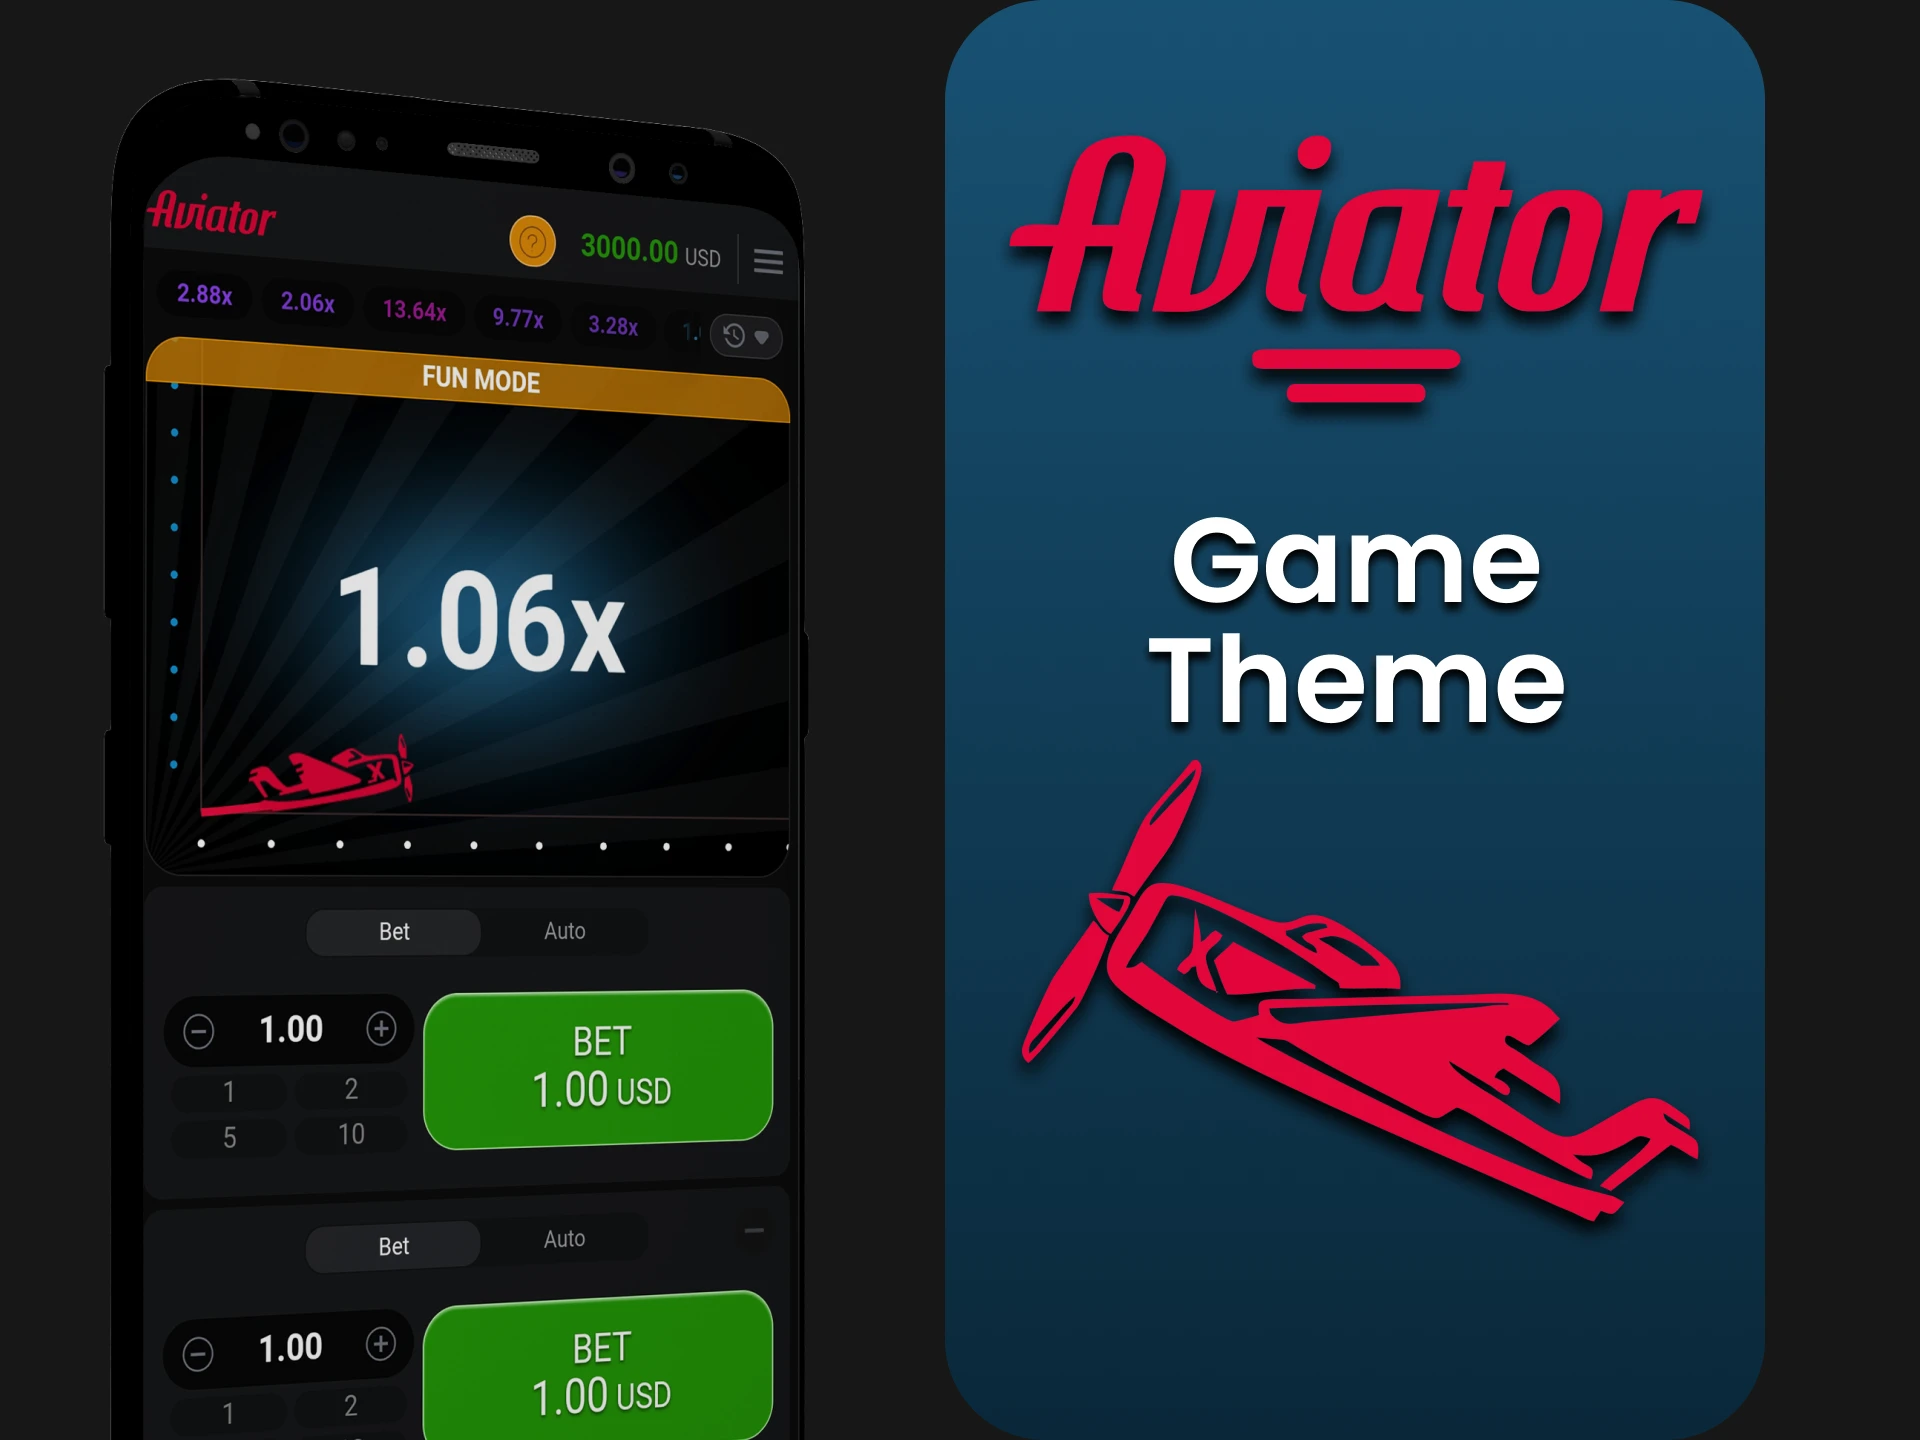 The Aviator game has a unique game design.